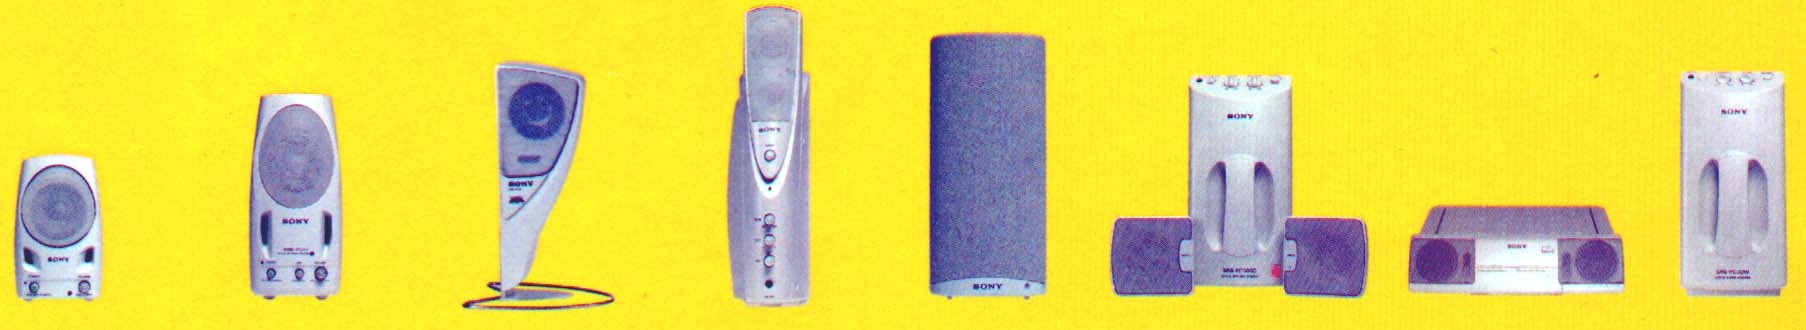 speakers2.JPG (46856 bytes)